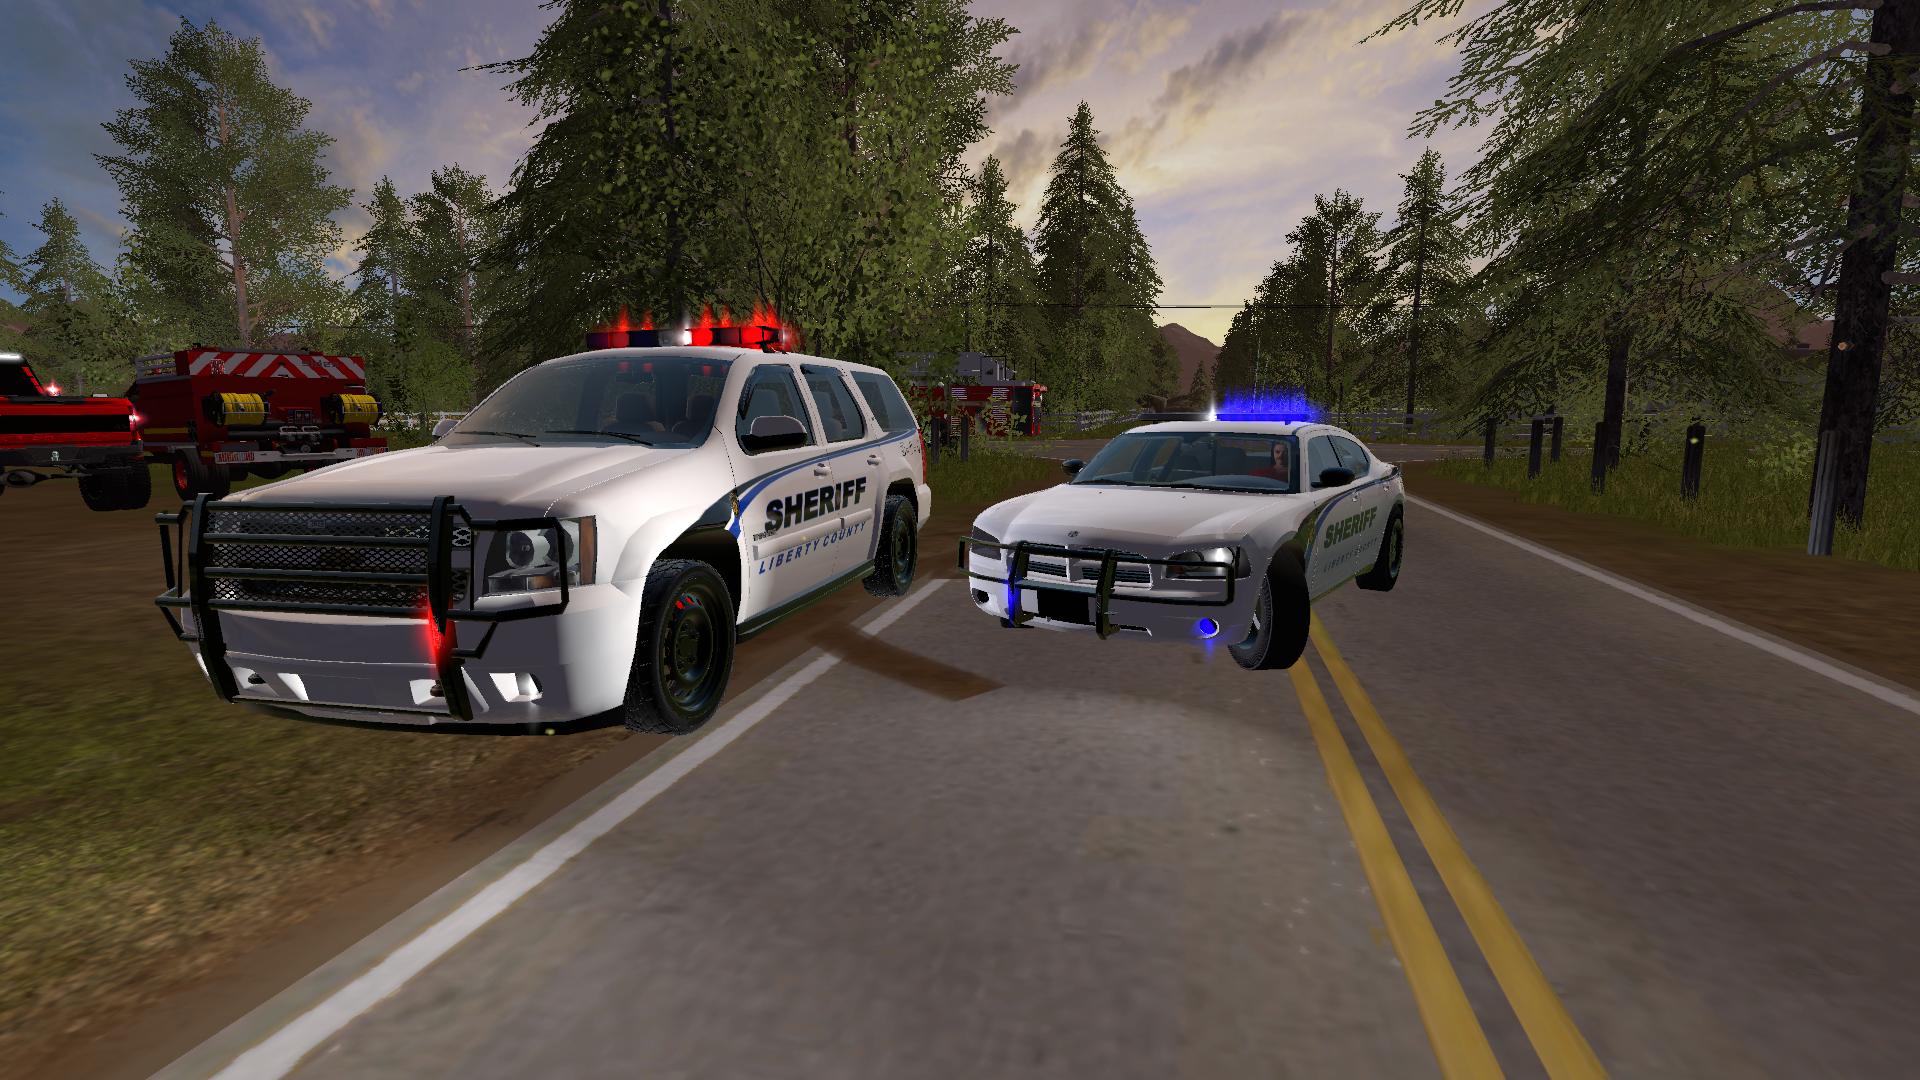 farming simulator 19 police car